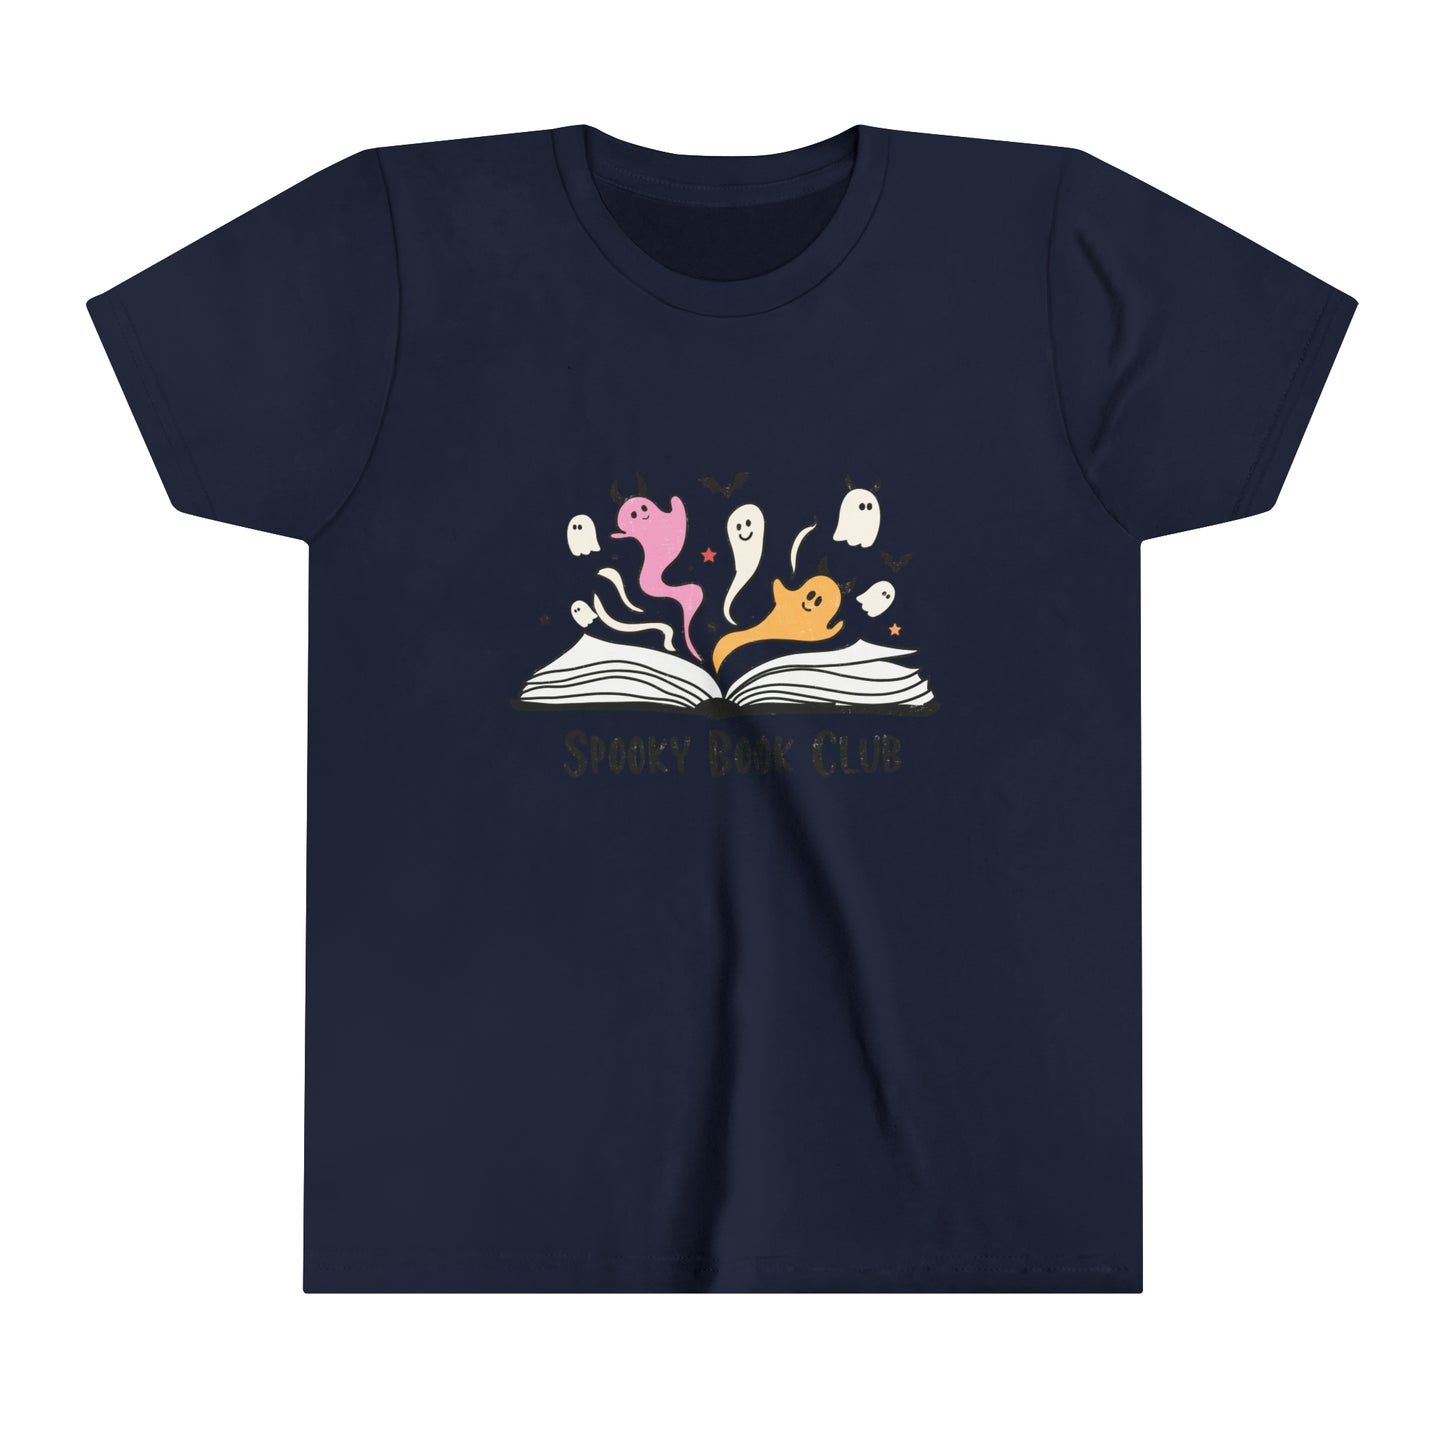 Spooky Book Club Girl's Youth Short Sleeve Tee